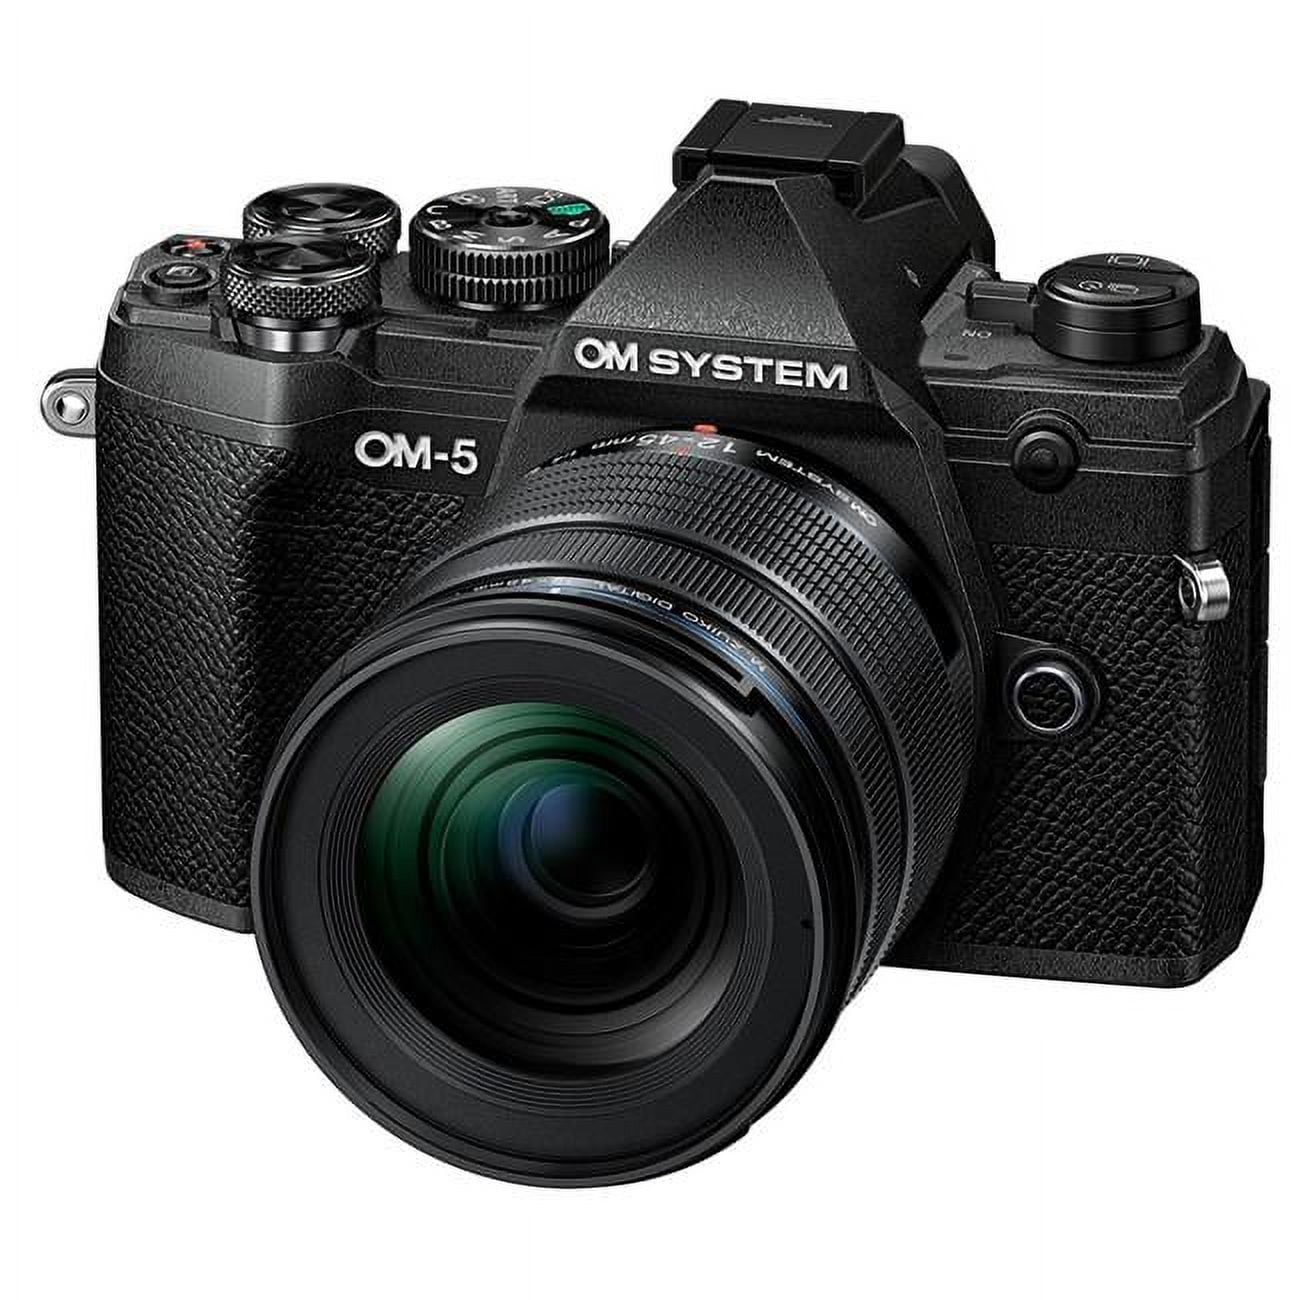 Picture of OM Digital Solutions V210022BU000 N 5 Mirrorless Digital Camera Kit, Black